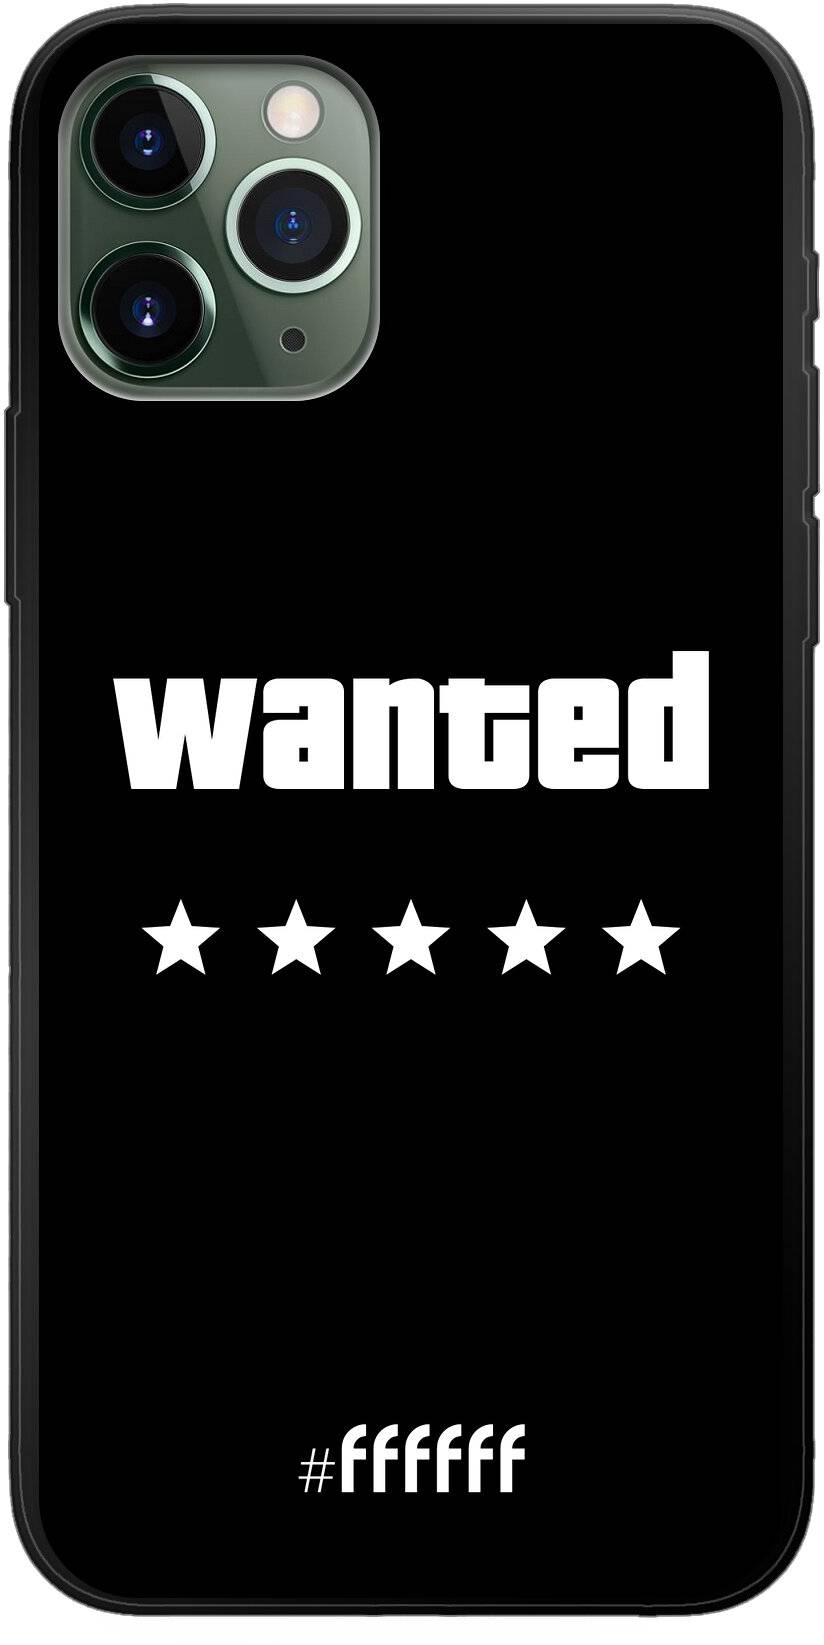 Grand Theft Auto iPhone 11 Pro